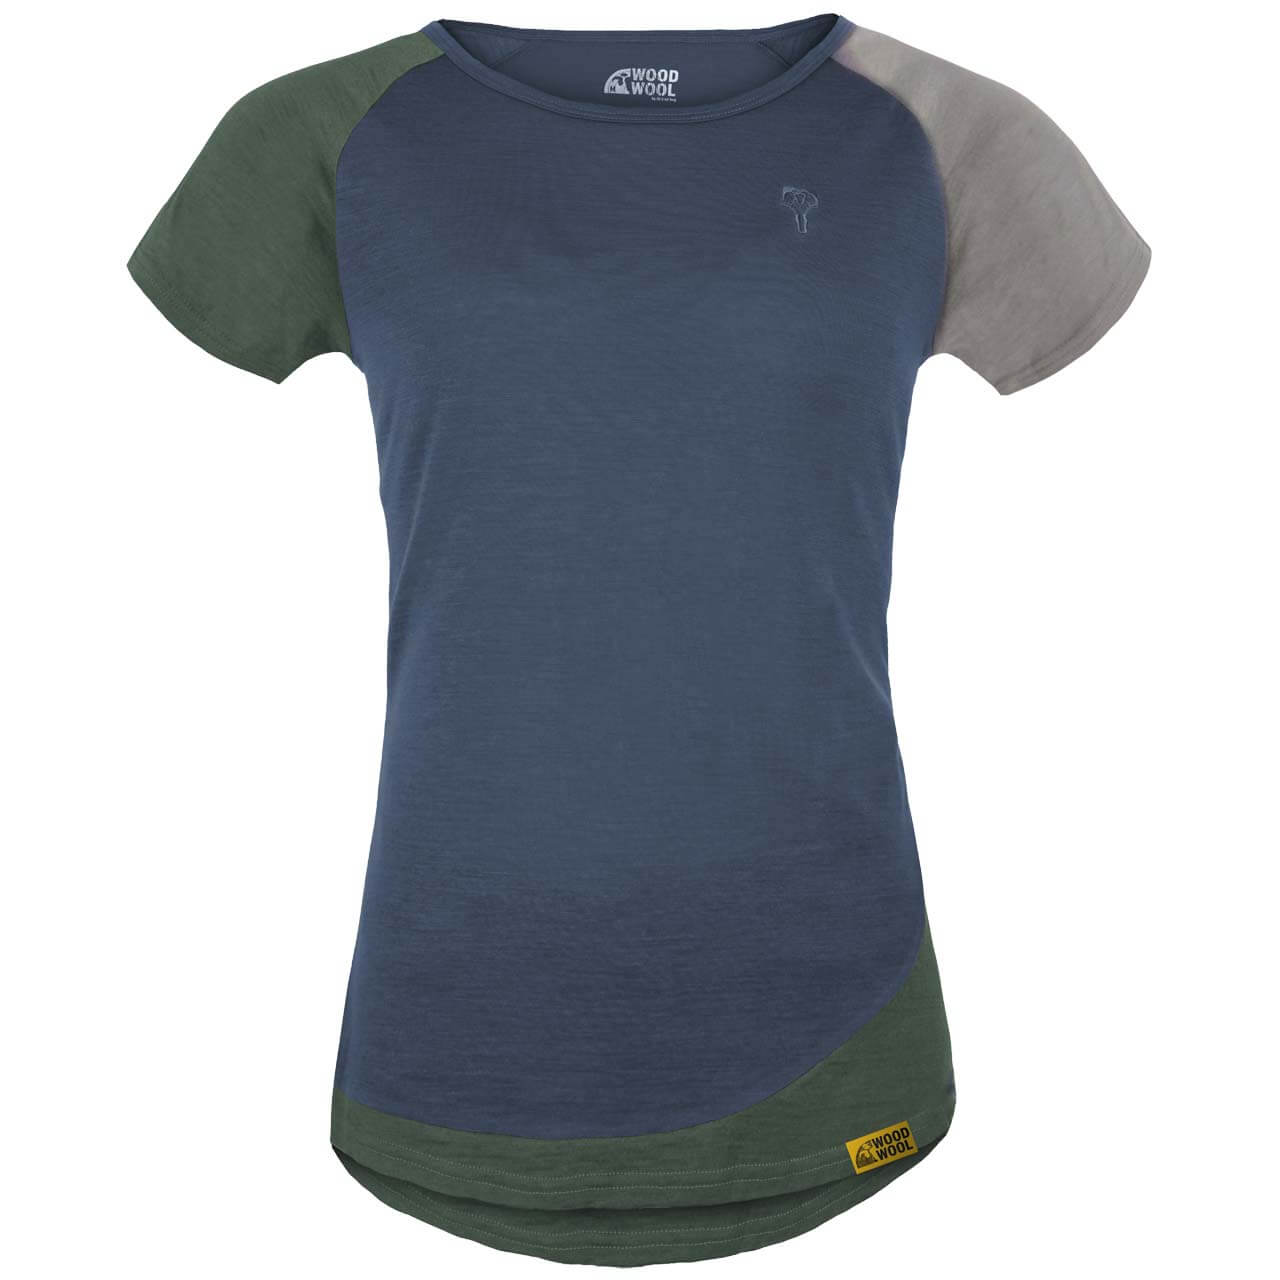 Grüezi Bag WoodWool Janeway T-Shirt - Ocean Cavern, L von Grüezi Bag